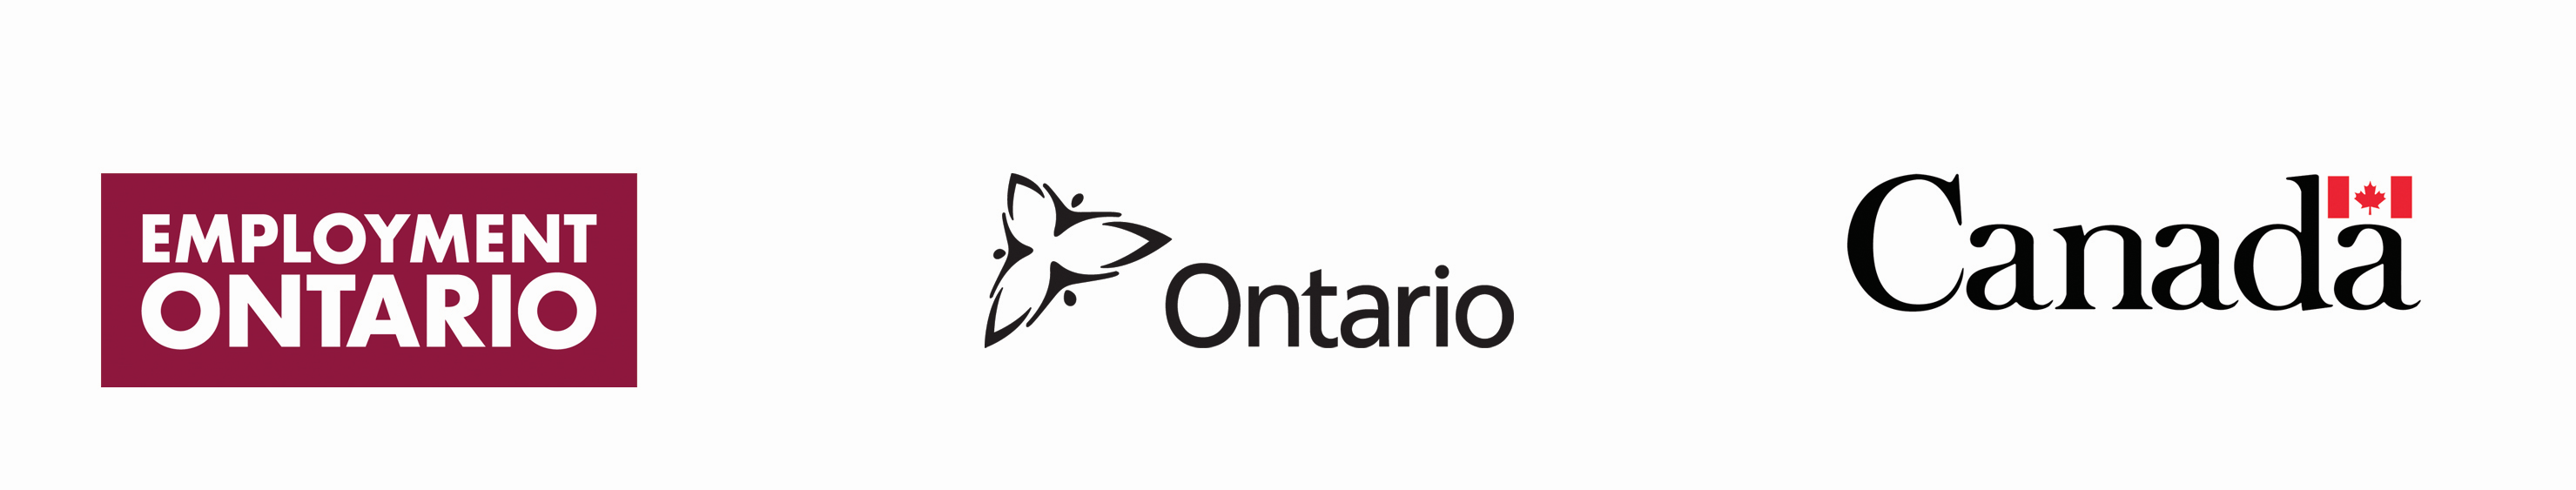 Government of Ontario logos